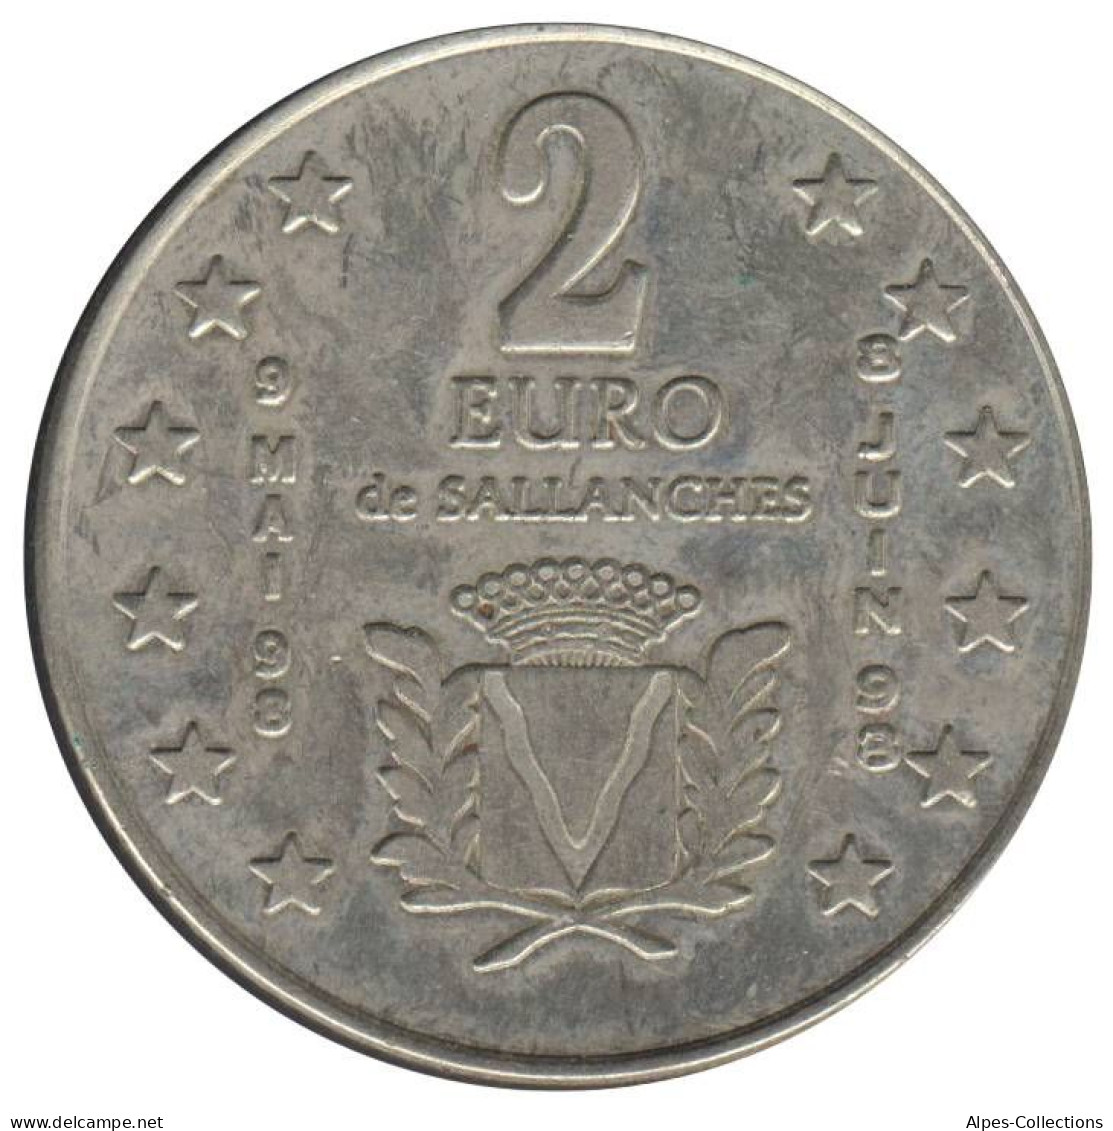 SALLANCHES - EU0020.2 - 2 EURO DES VILLES - Réf: NR - 1998 - Euros Des Villes